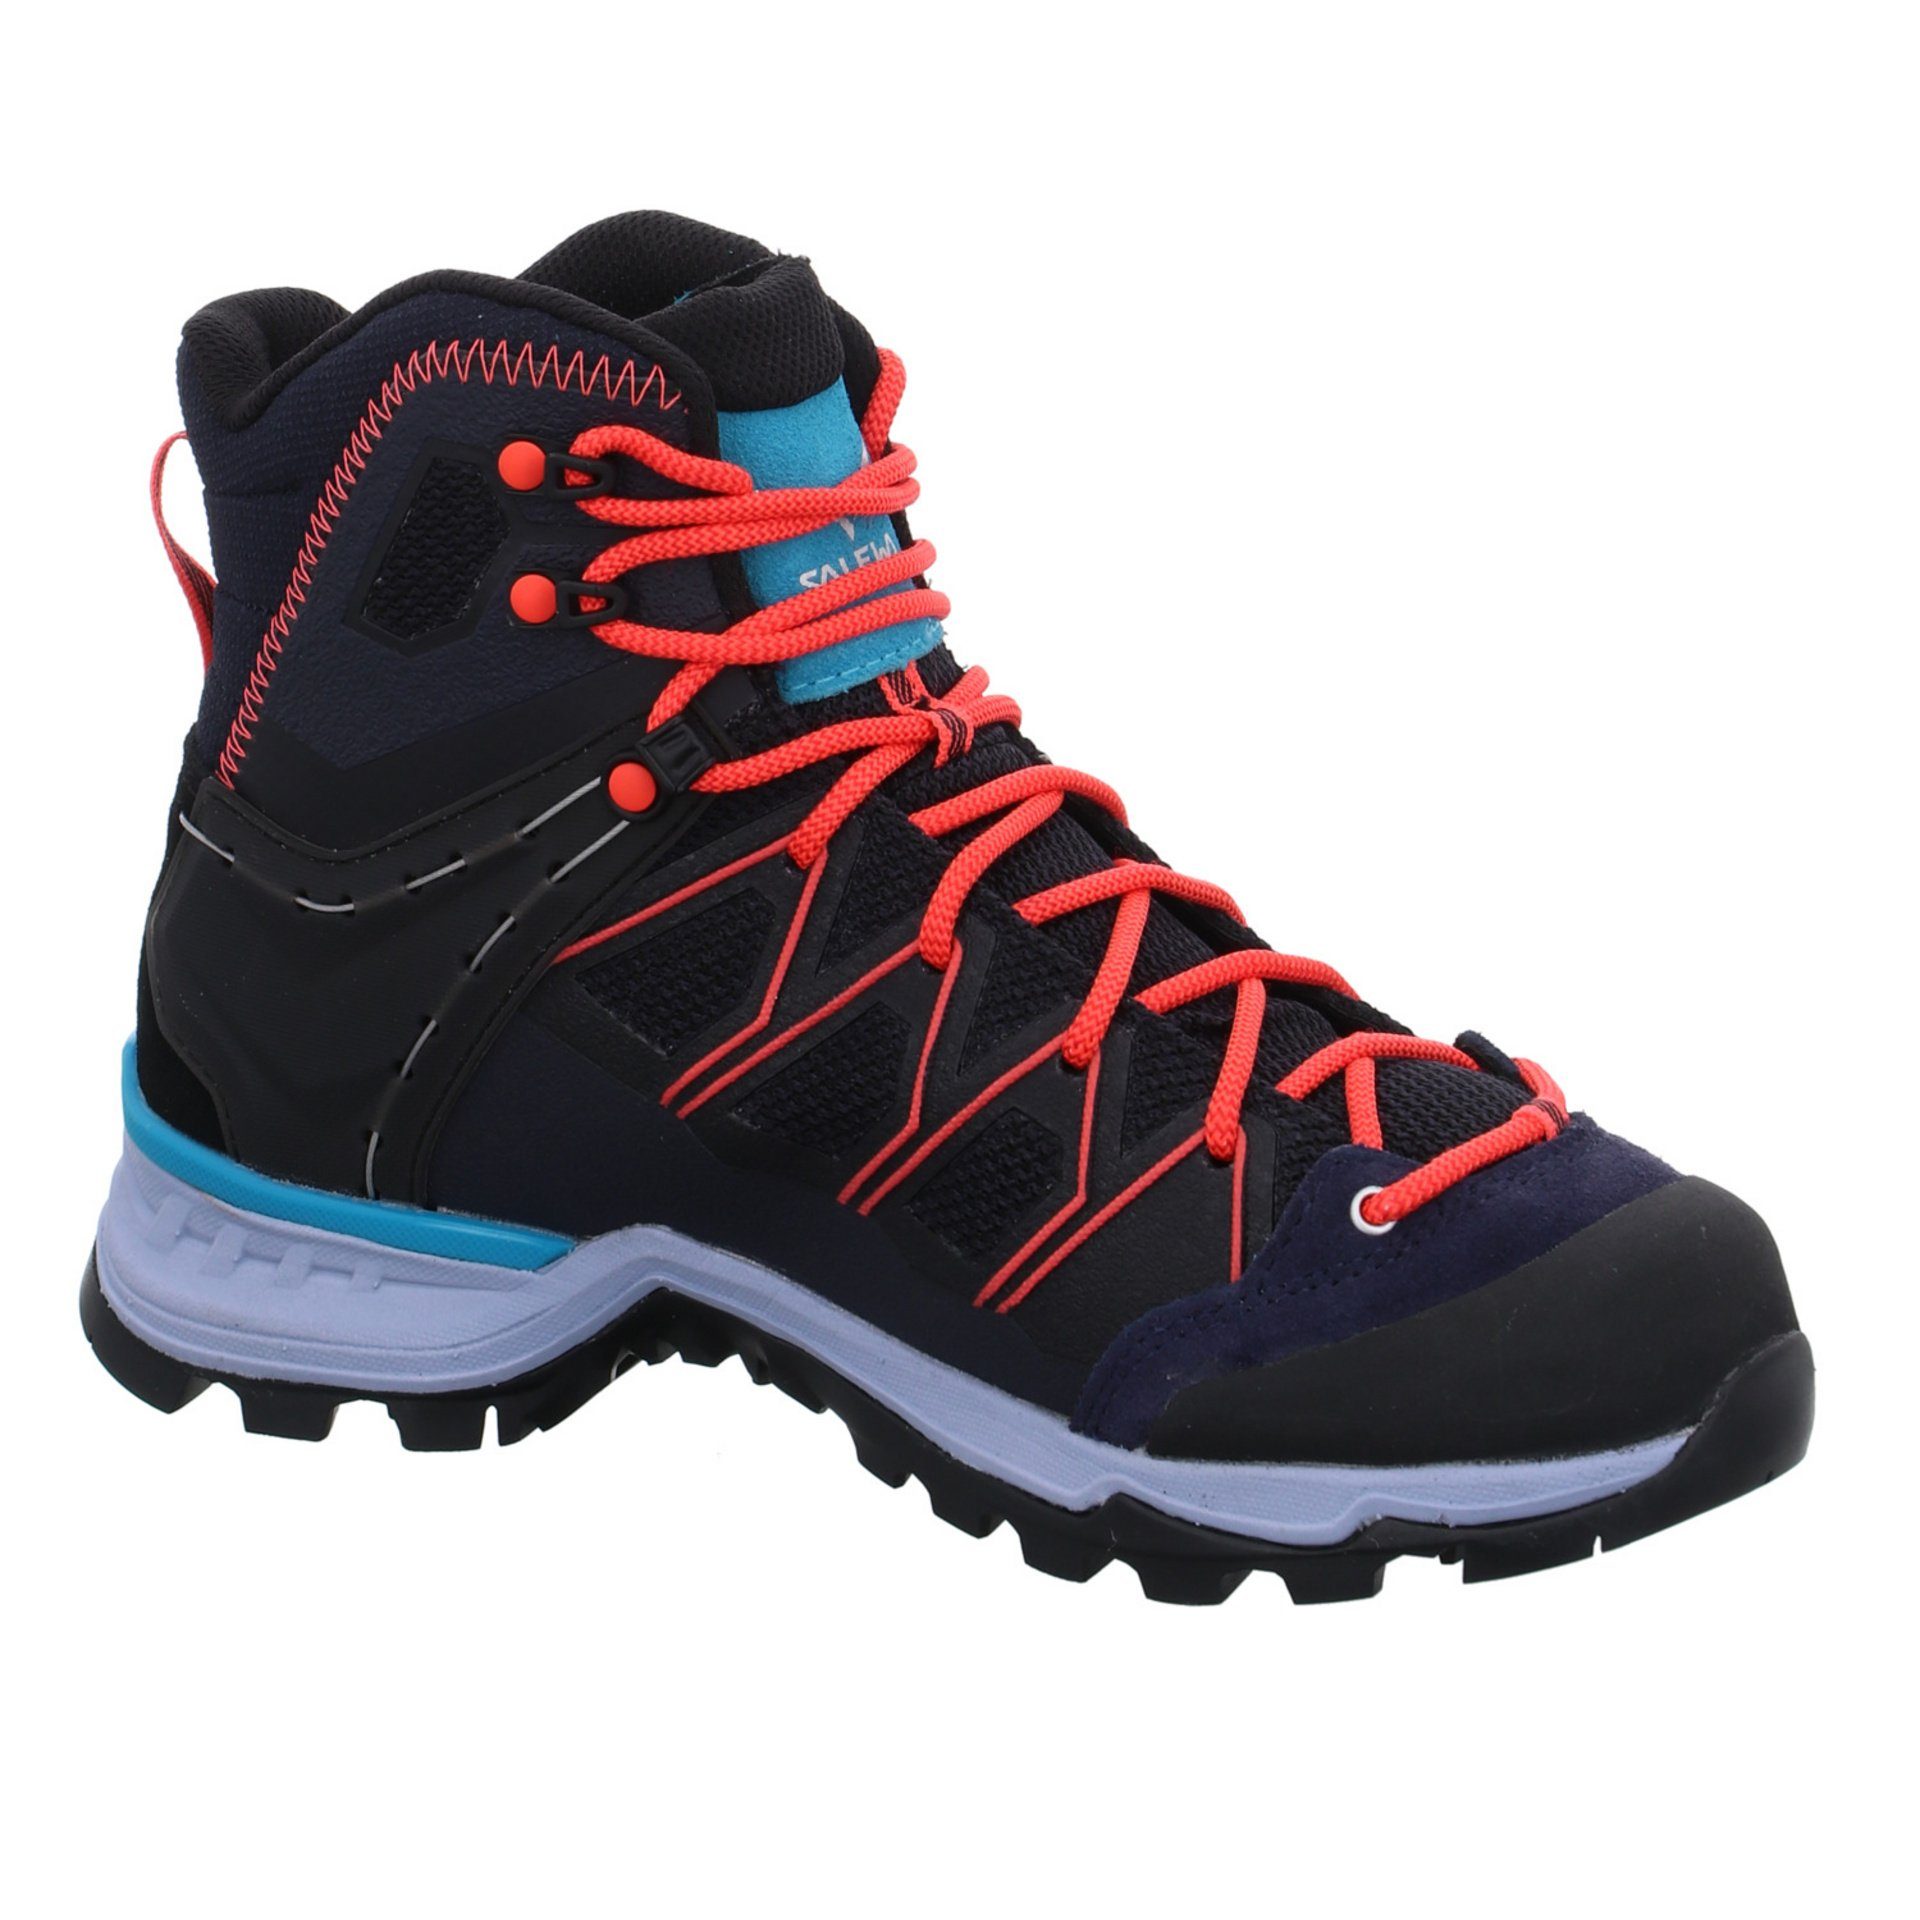 3989 Schuhe Fog Navy/Blue Damen Outdoor Salewa Outdoorschuh Leder-/Textilkombination Premium